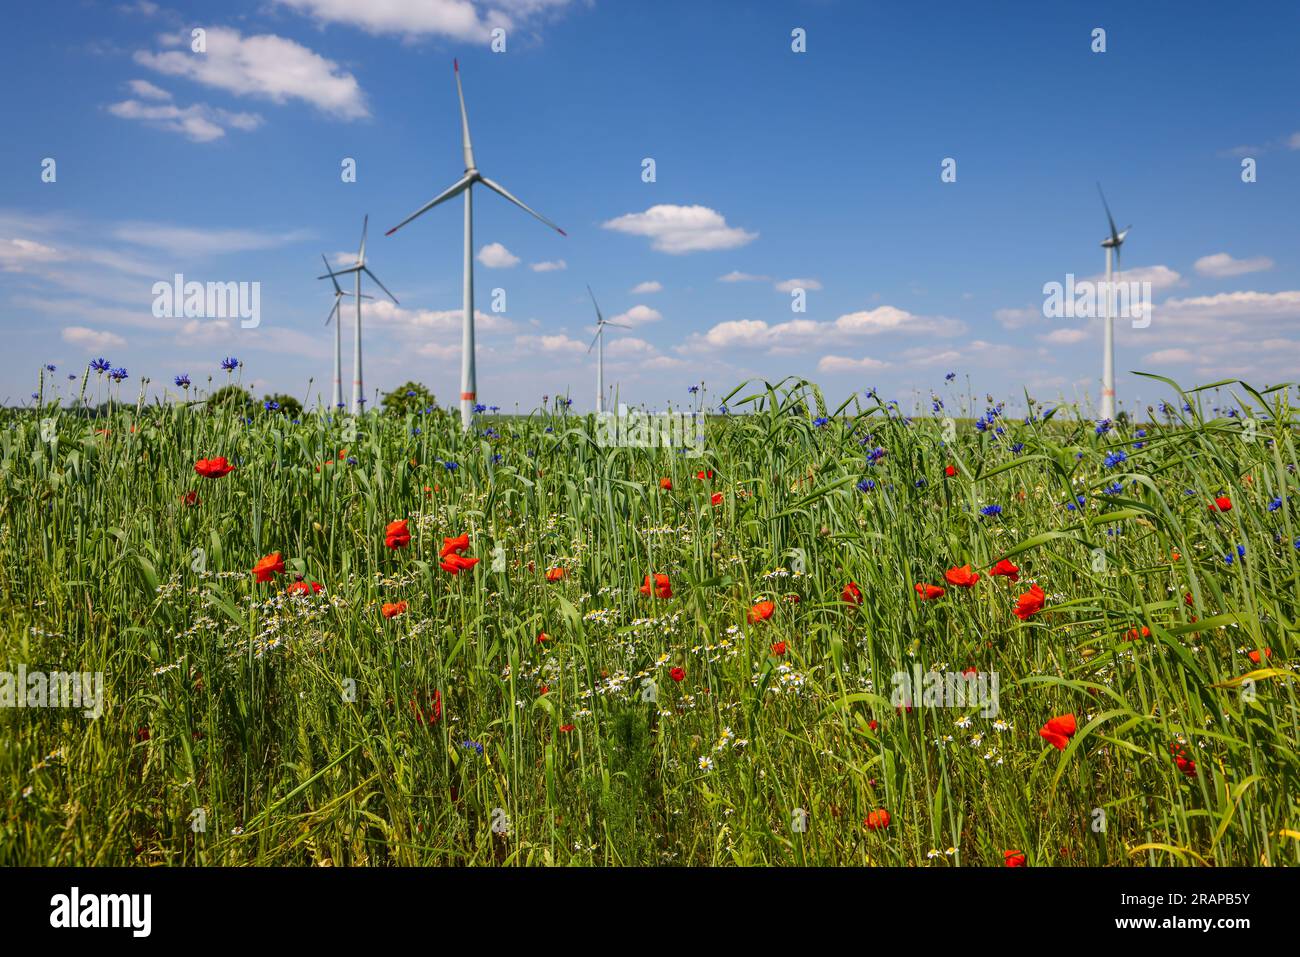 Lichtenau, North Rhine-Westphalia, Germany - flowering strips on wheat field, poppies, cornflowers, behind a wind farm with wind turbines. Stock Photo